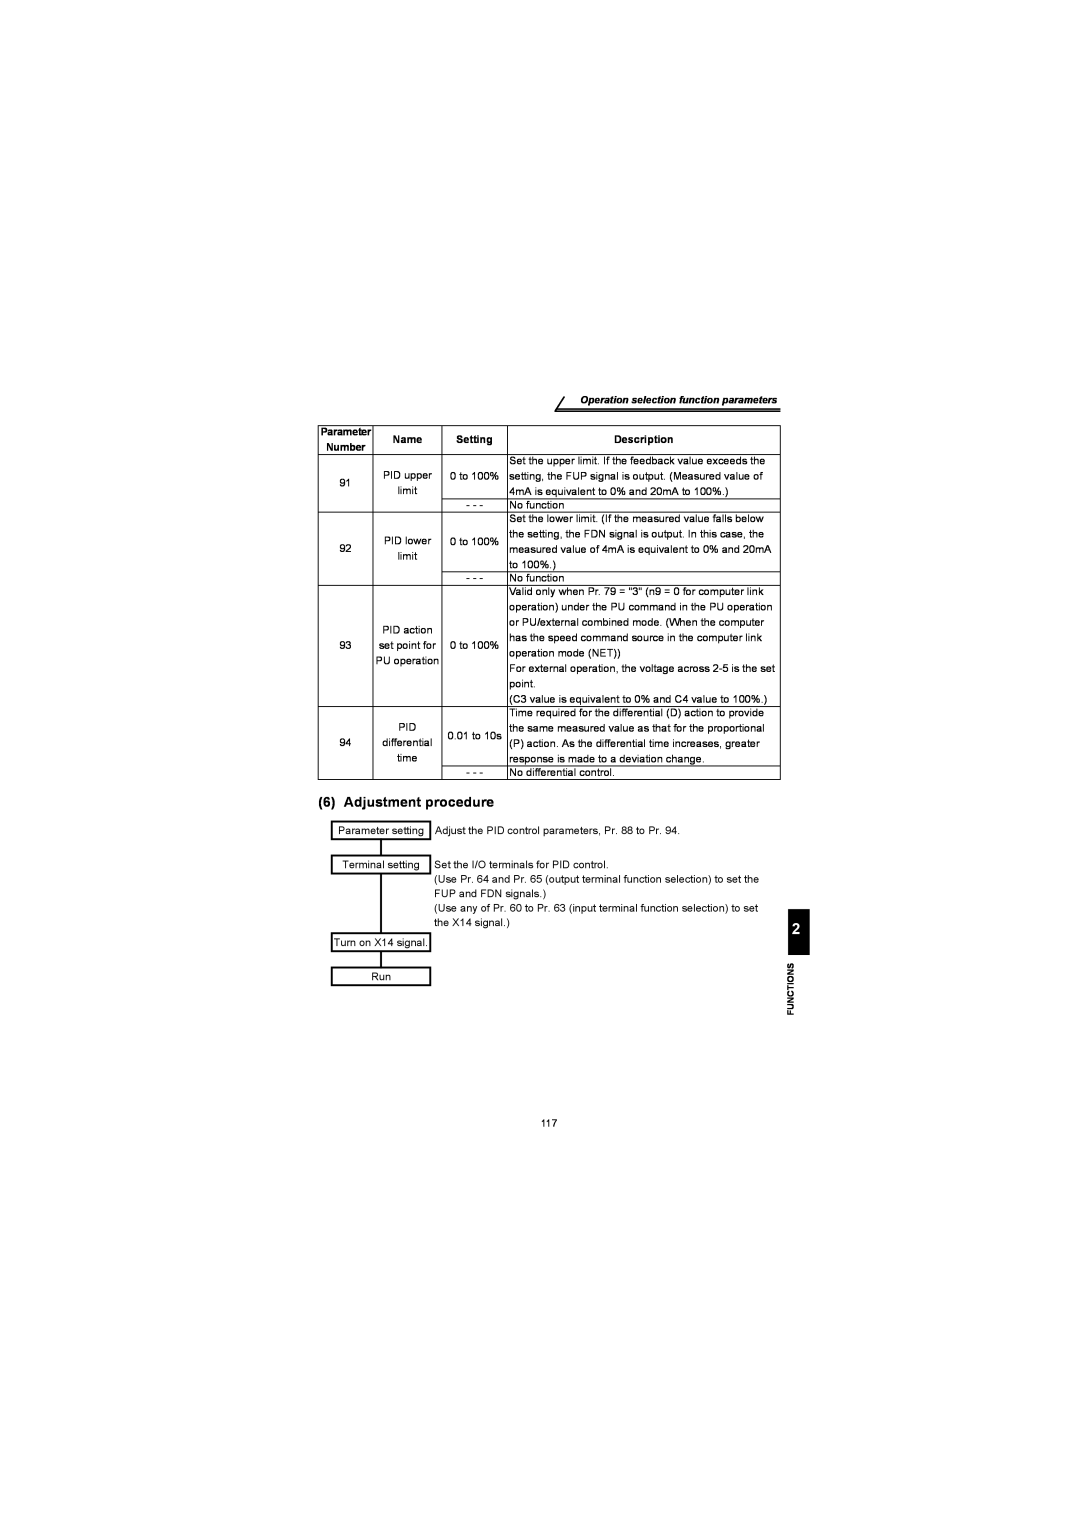 Mitsubishi Electronics FR-S500 instruction manual Adjustment procedure, Operation selection function parameters 